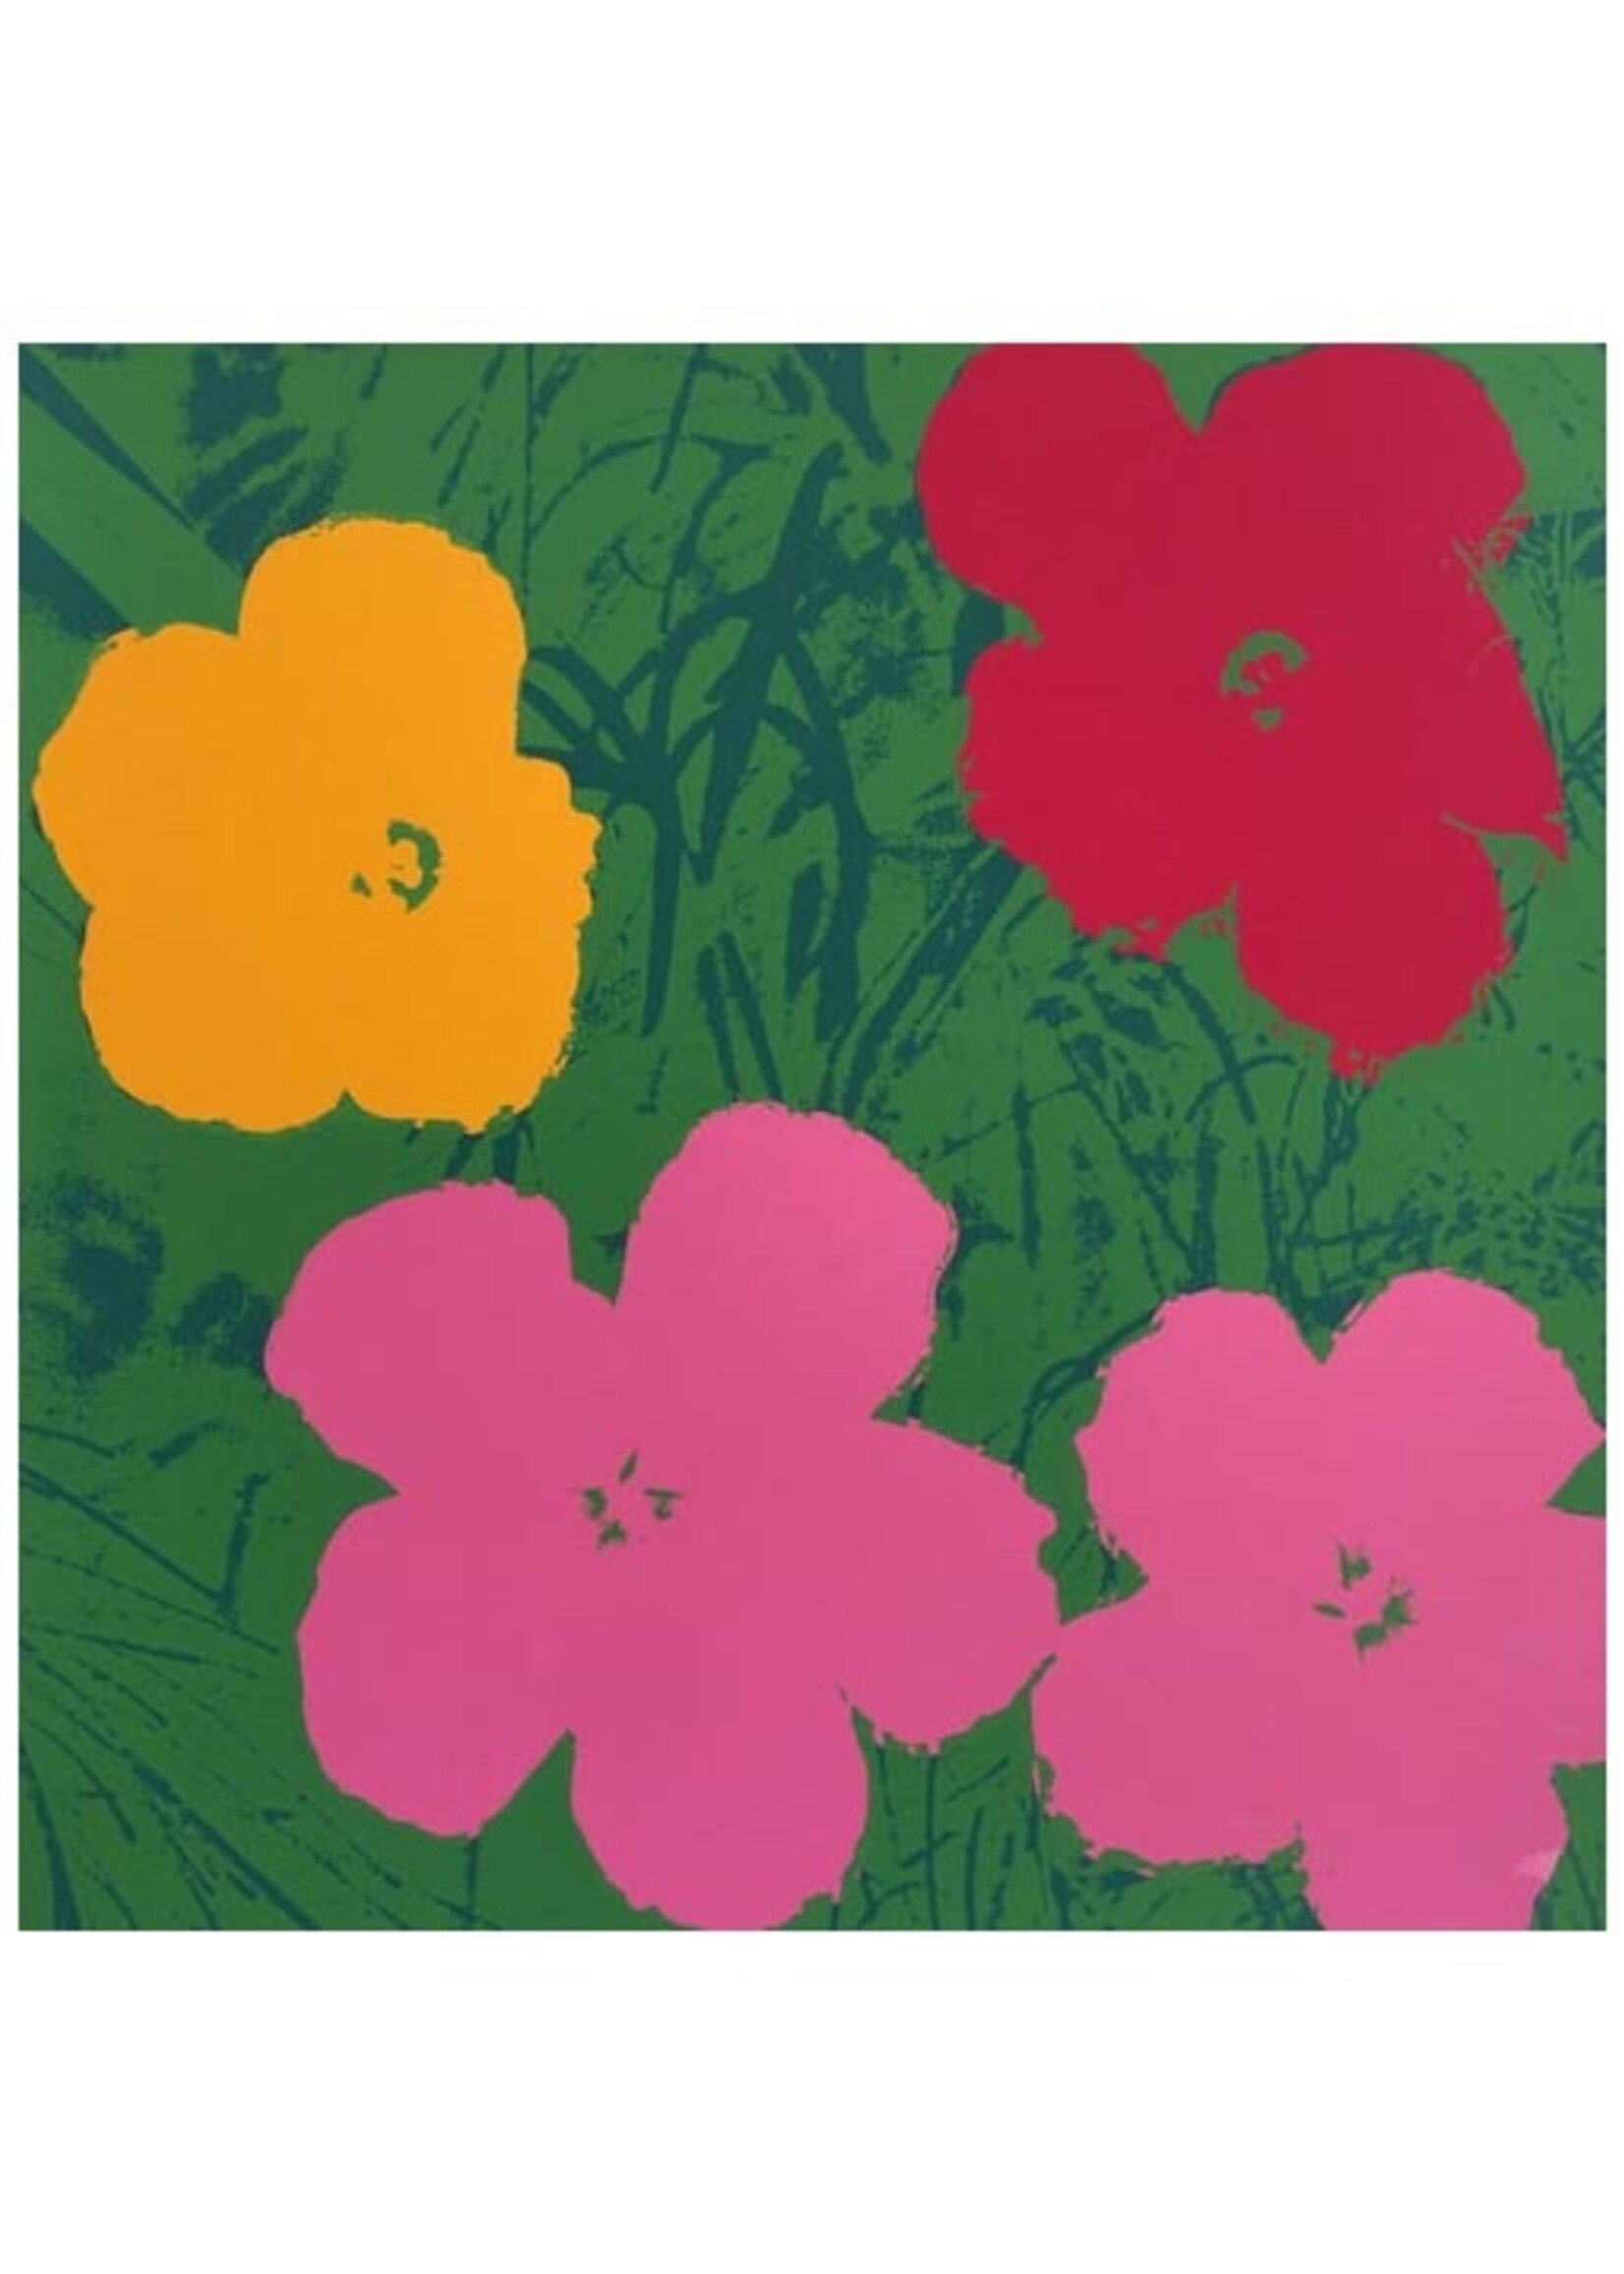 Andy Warhol Andy Warhol "Flowers"